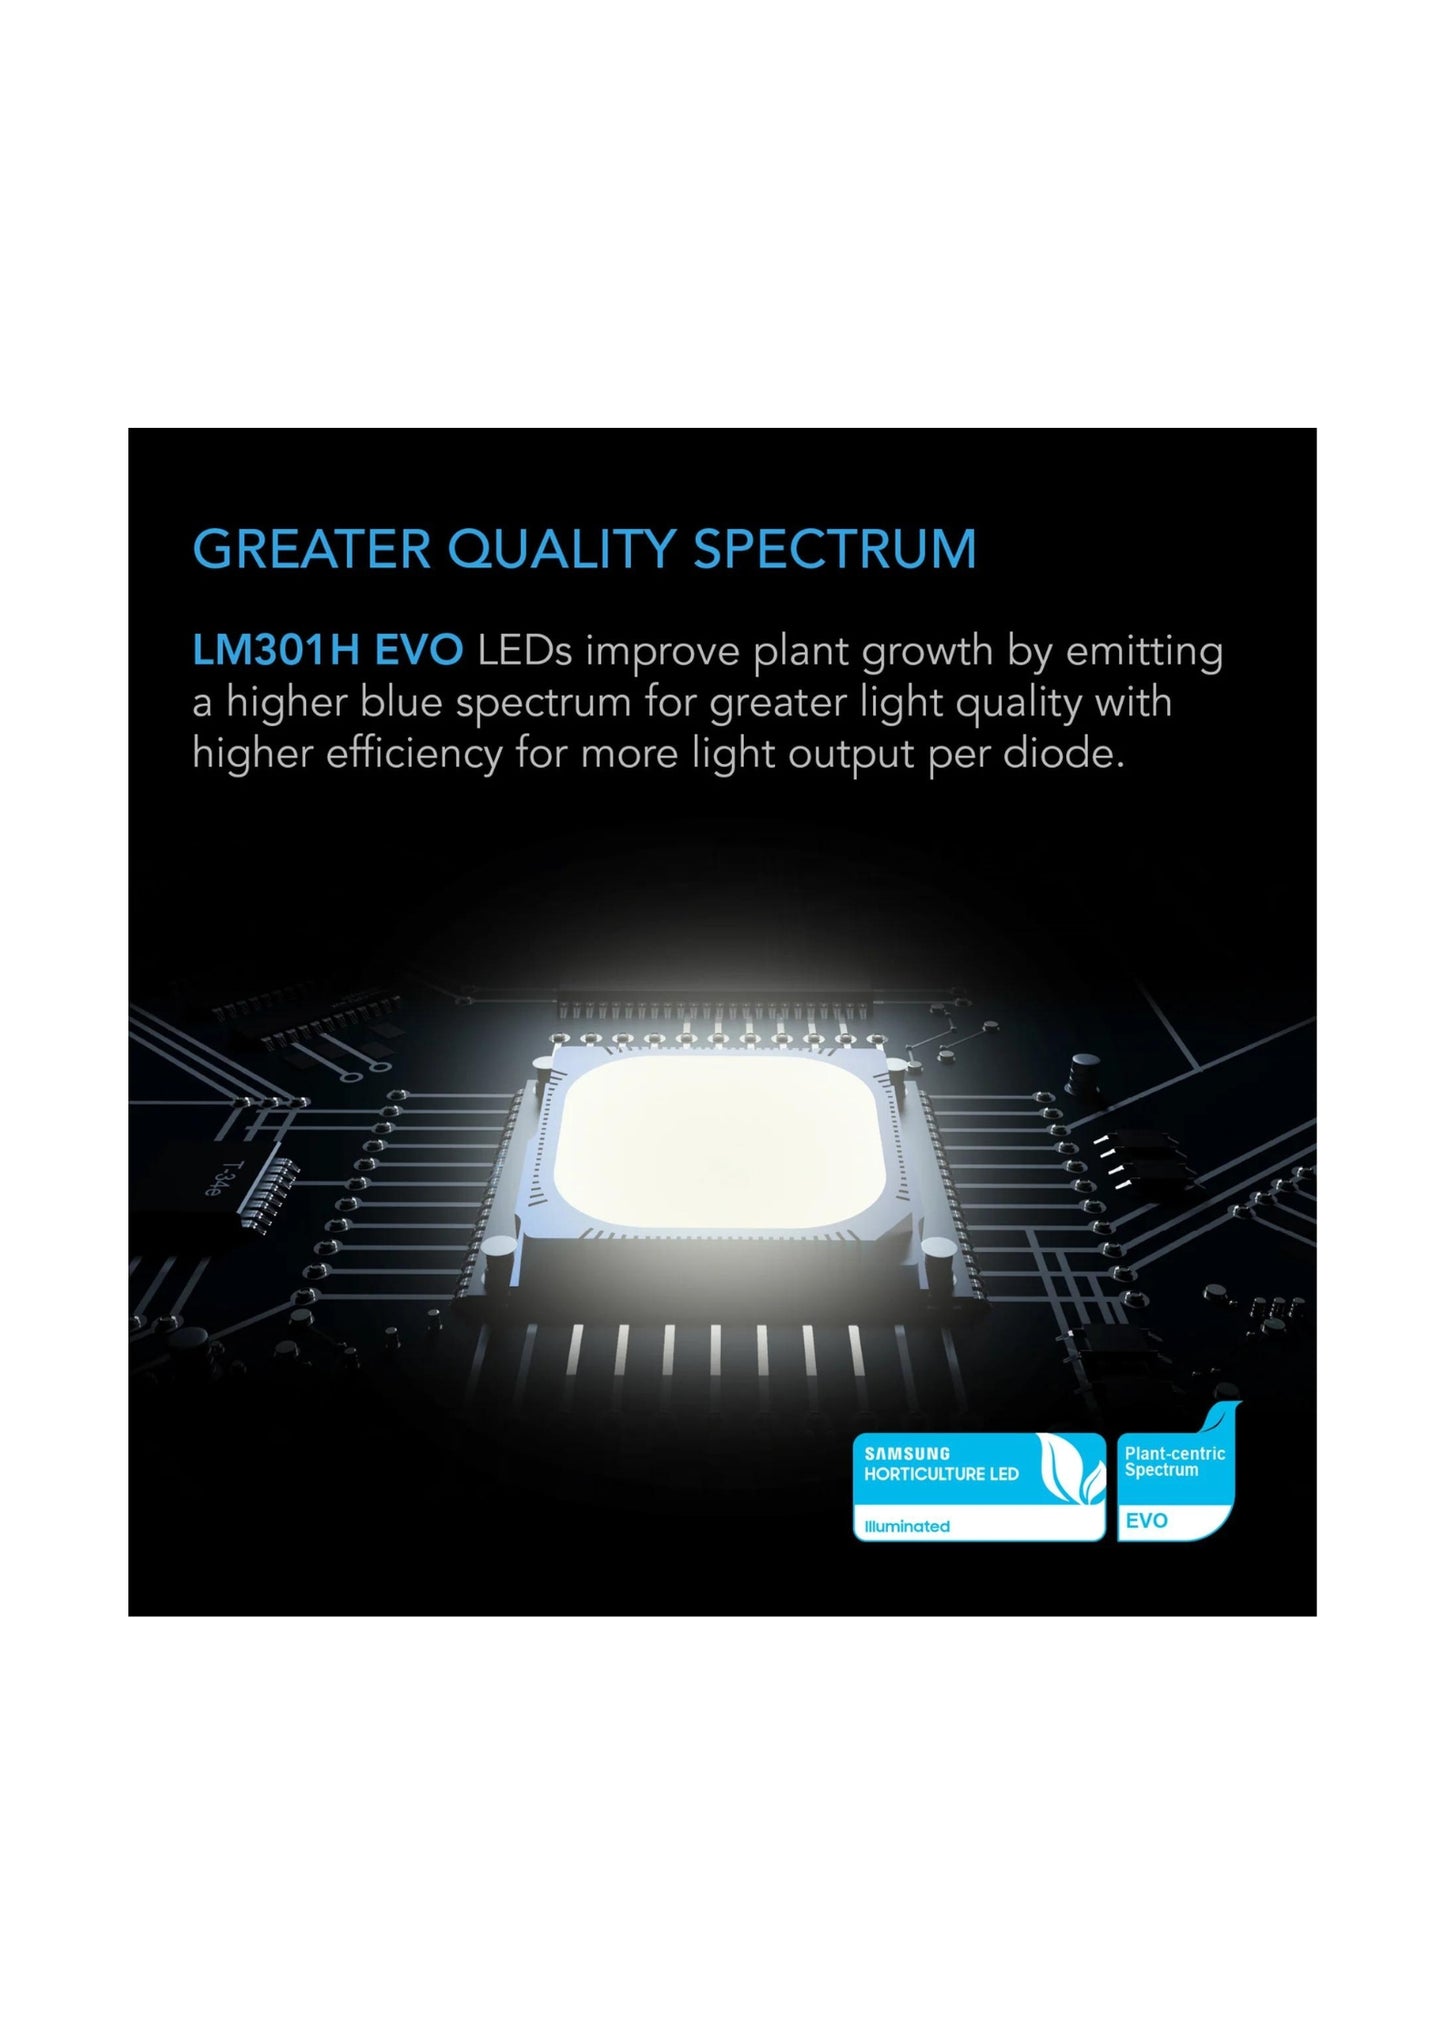 IONFRAME EVO4, Samsung LM301H EVO Commercial LED Grow Light, 300W, 3X3 FT